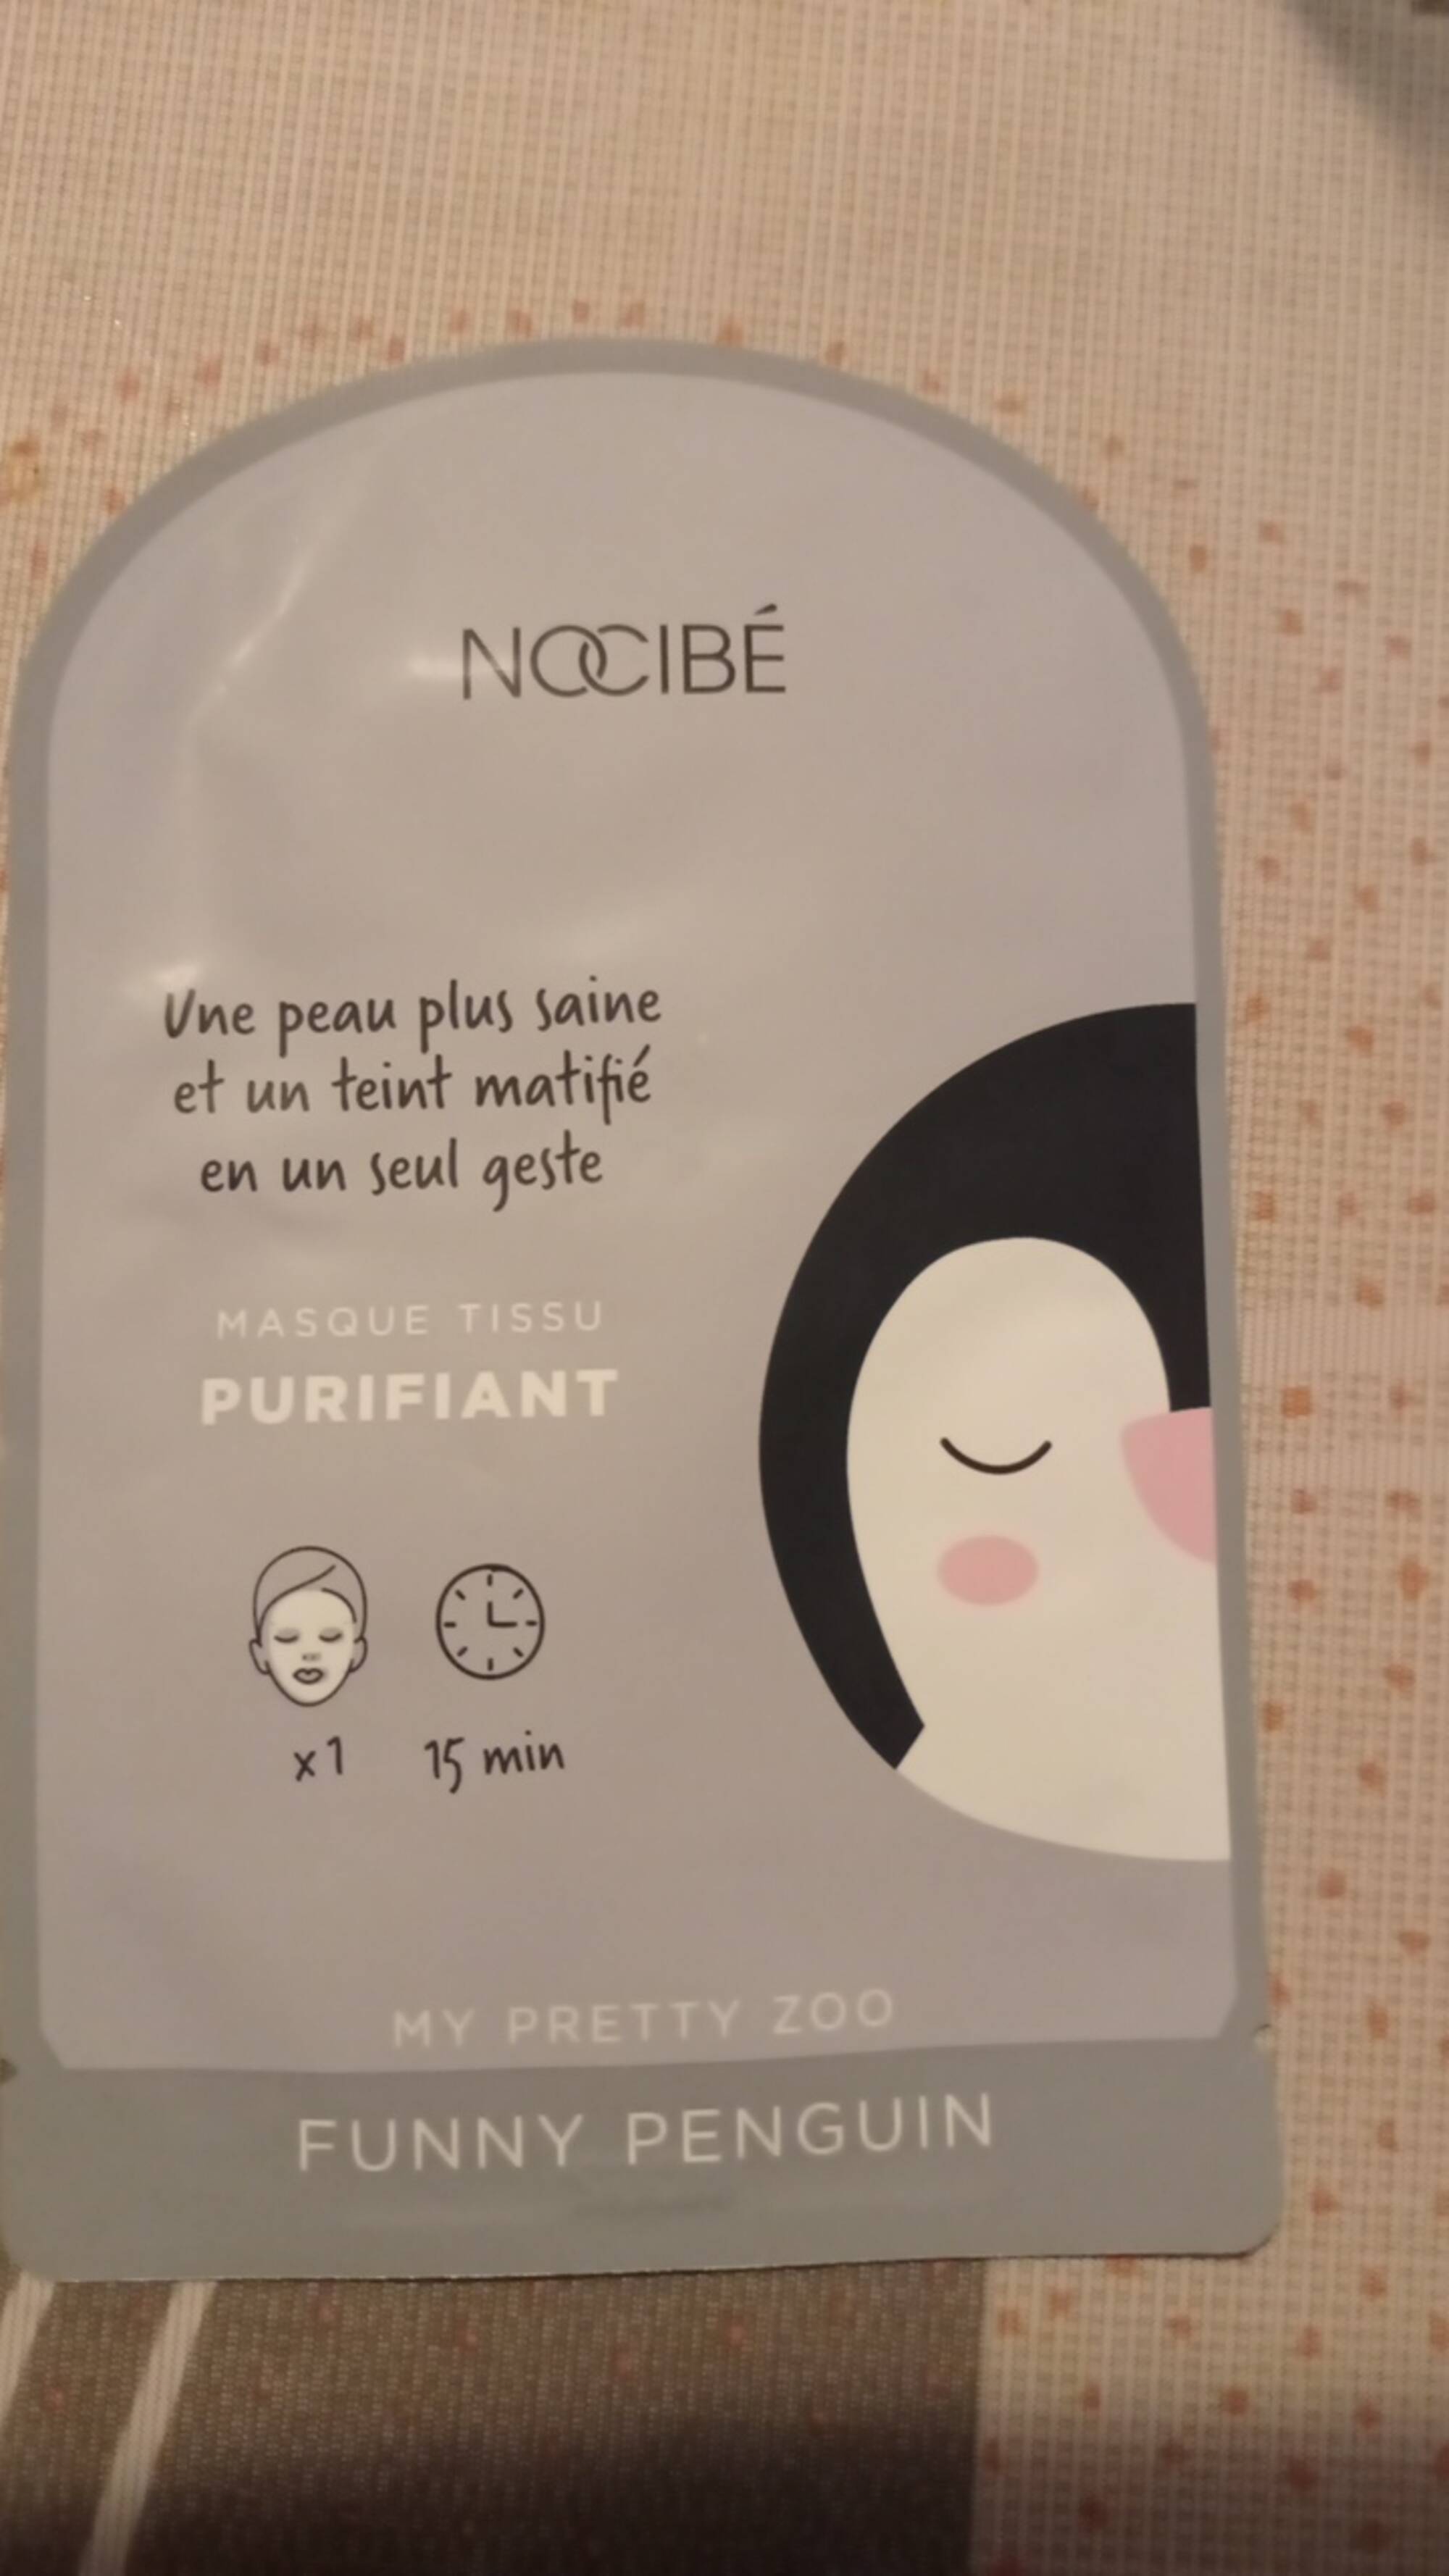 NOCIBÉ - Funny penguin - Masque tissu purifiant